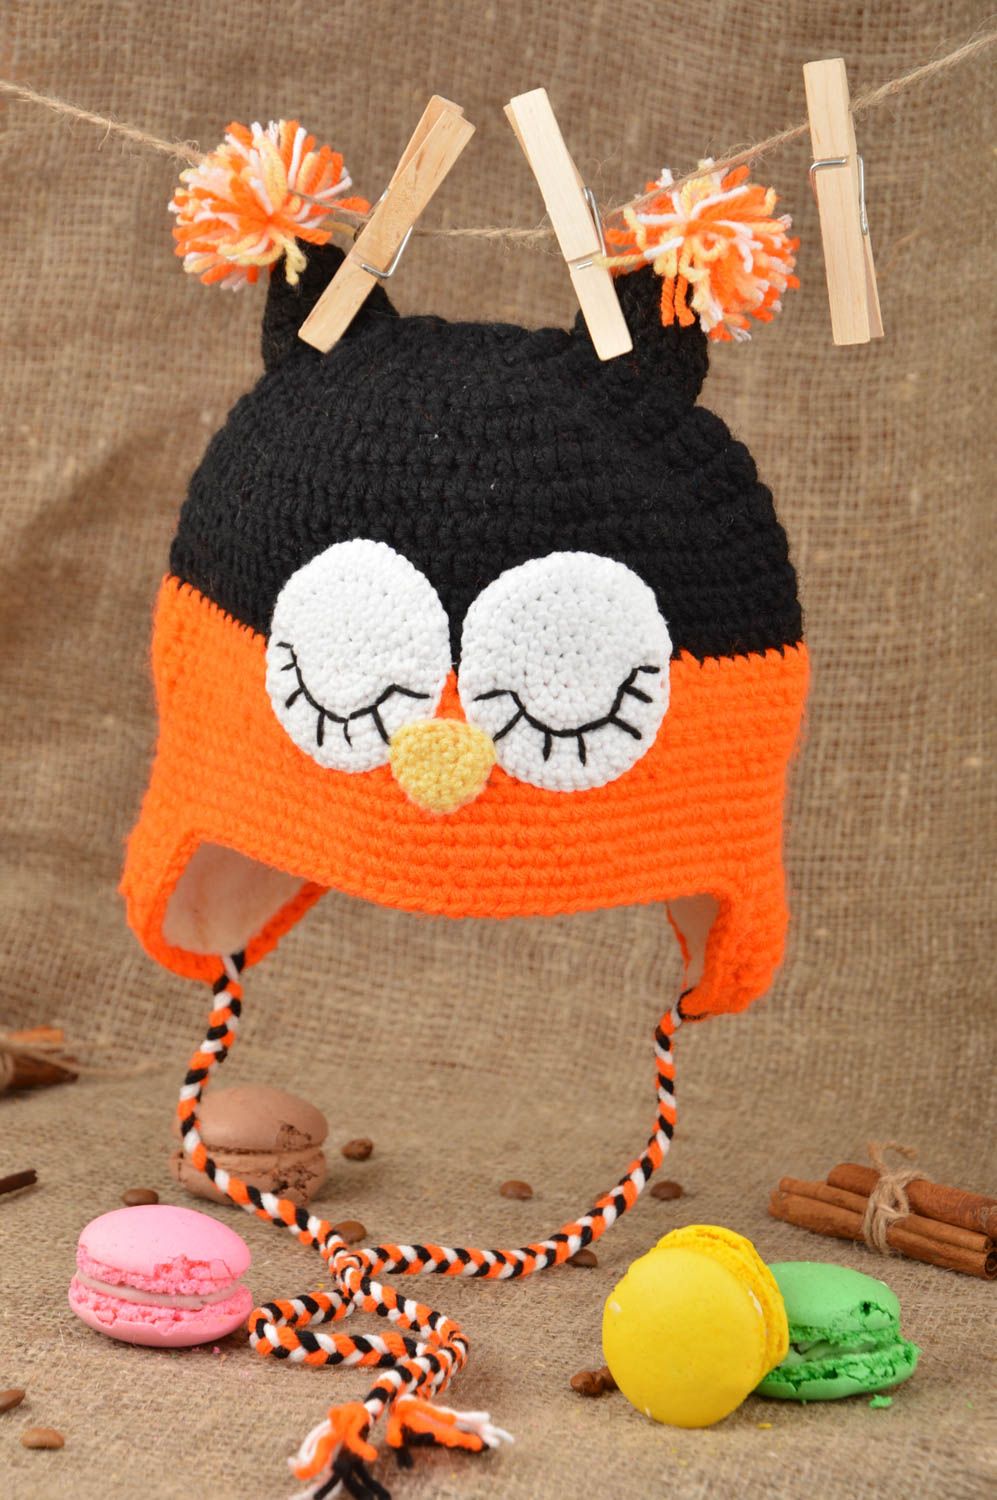 Handmade cute crocheted cap in shape of sleeping owl accessory for kids photo 1